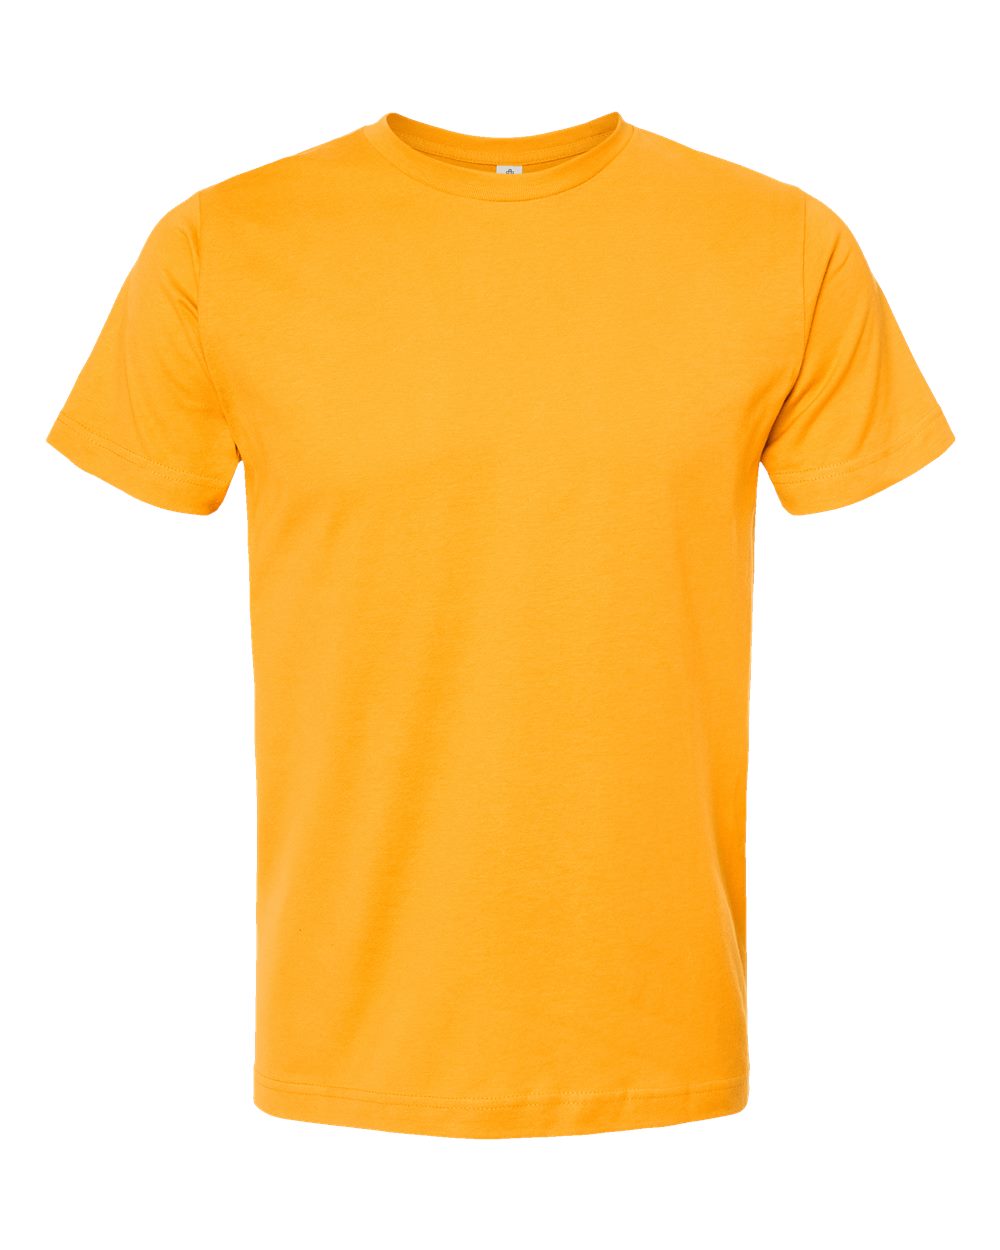 Tultex 202 Adult Shirt - Large-XXL